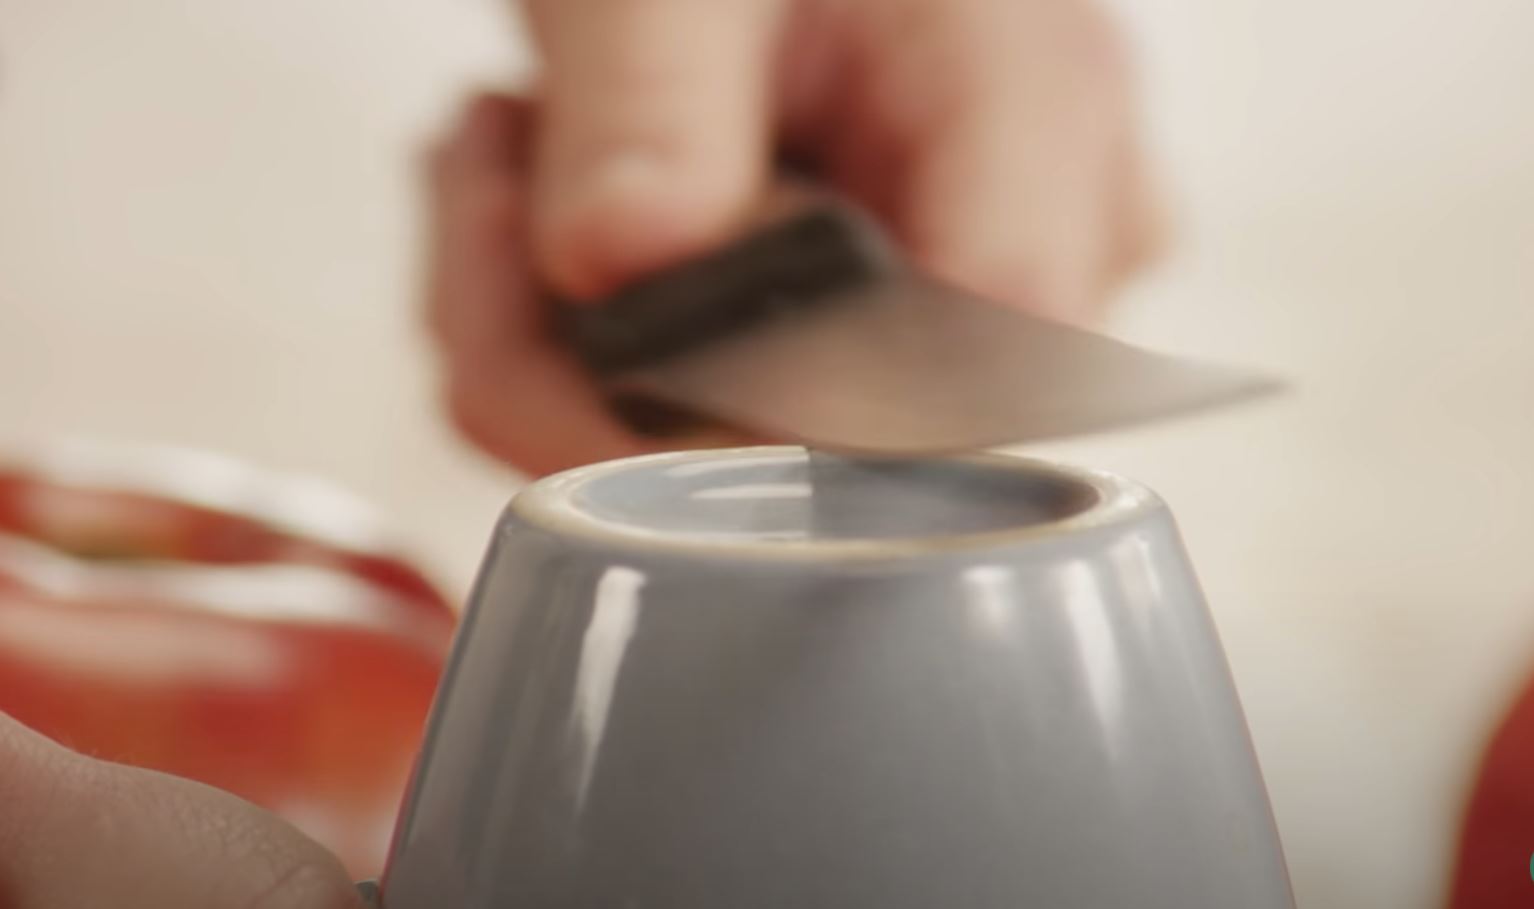 sharpen knife with mug